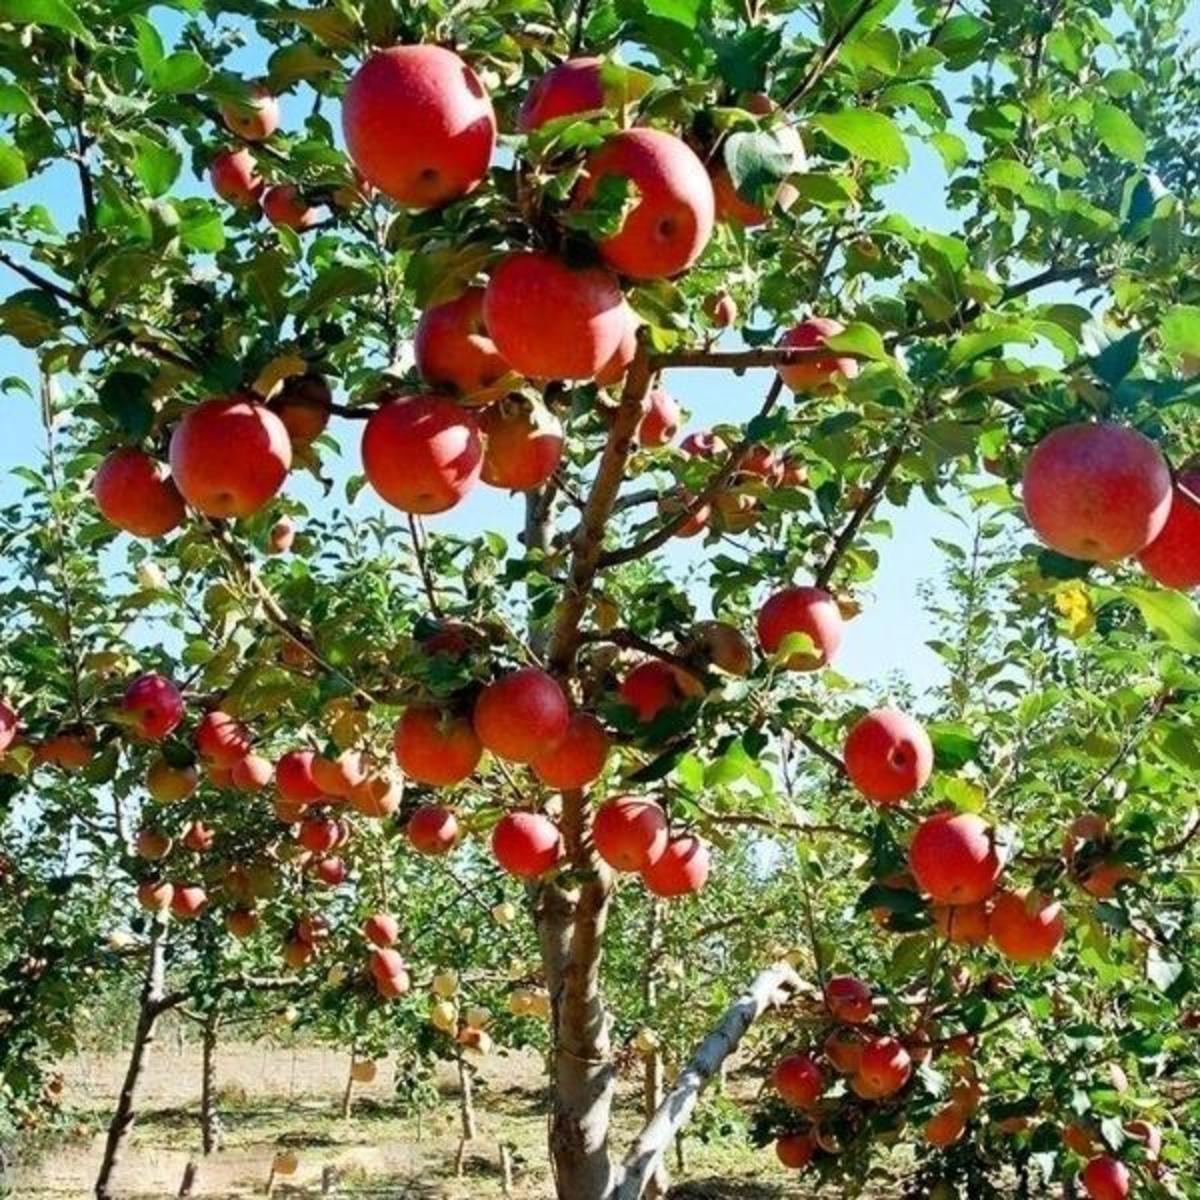 https://images.saymedia-content.com/.image/t_share/MTk1OTMwOTI4NzM5MDAxMzcw/how-to-grow-fuji-apple-trees.jpg